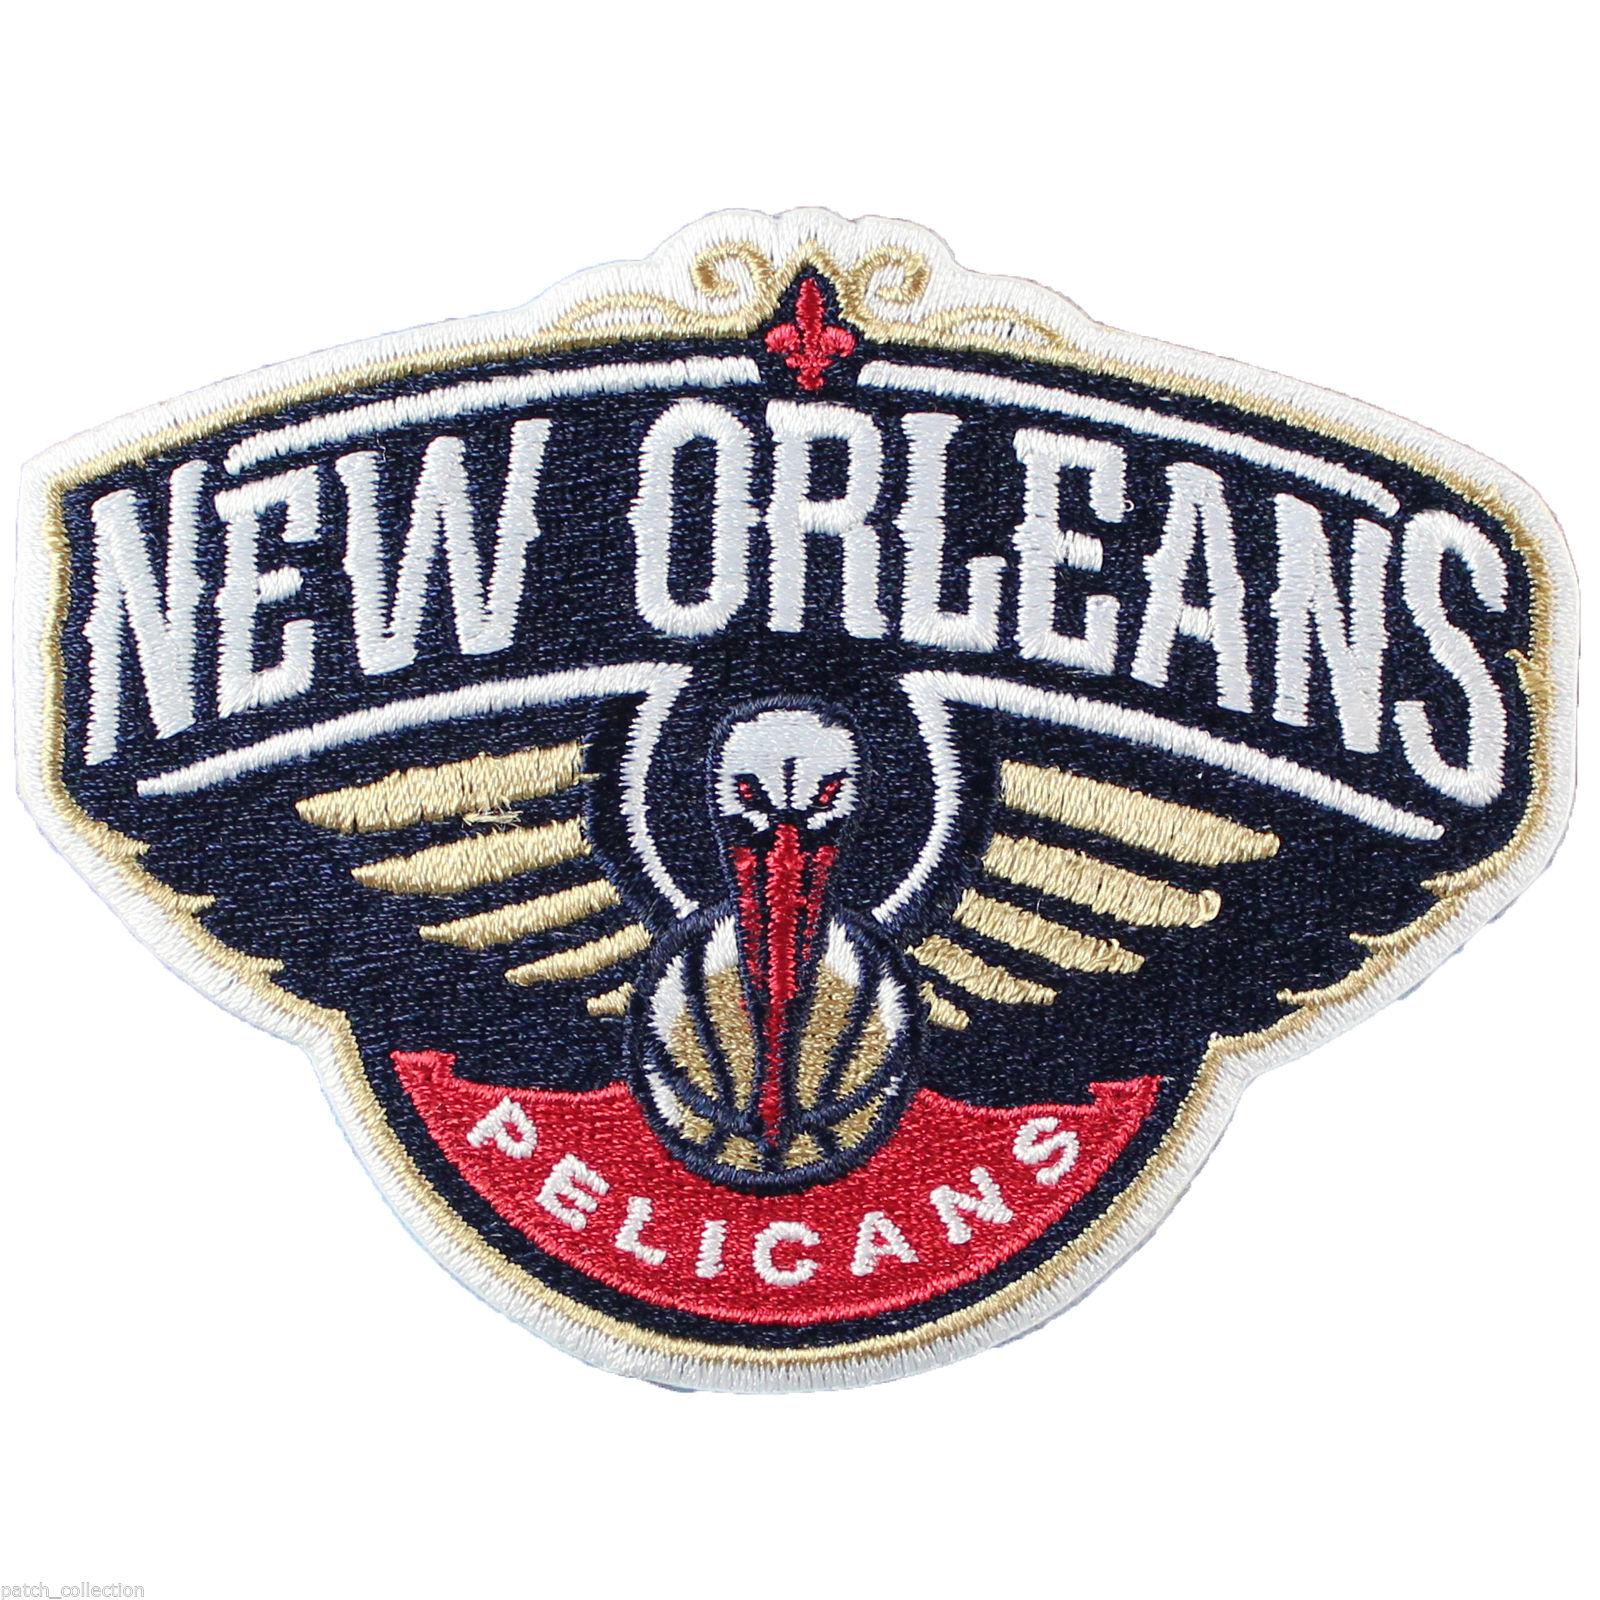 New Orleans Pelicans ニューオーリンズ ペリカンズ アメリカンスポーツ 海外ショッピングサイト セカイモン